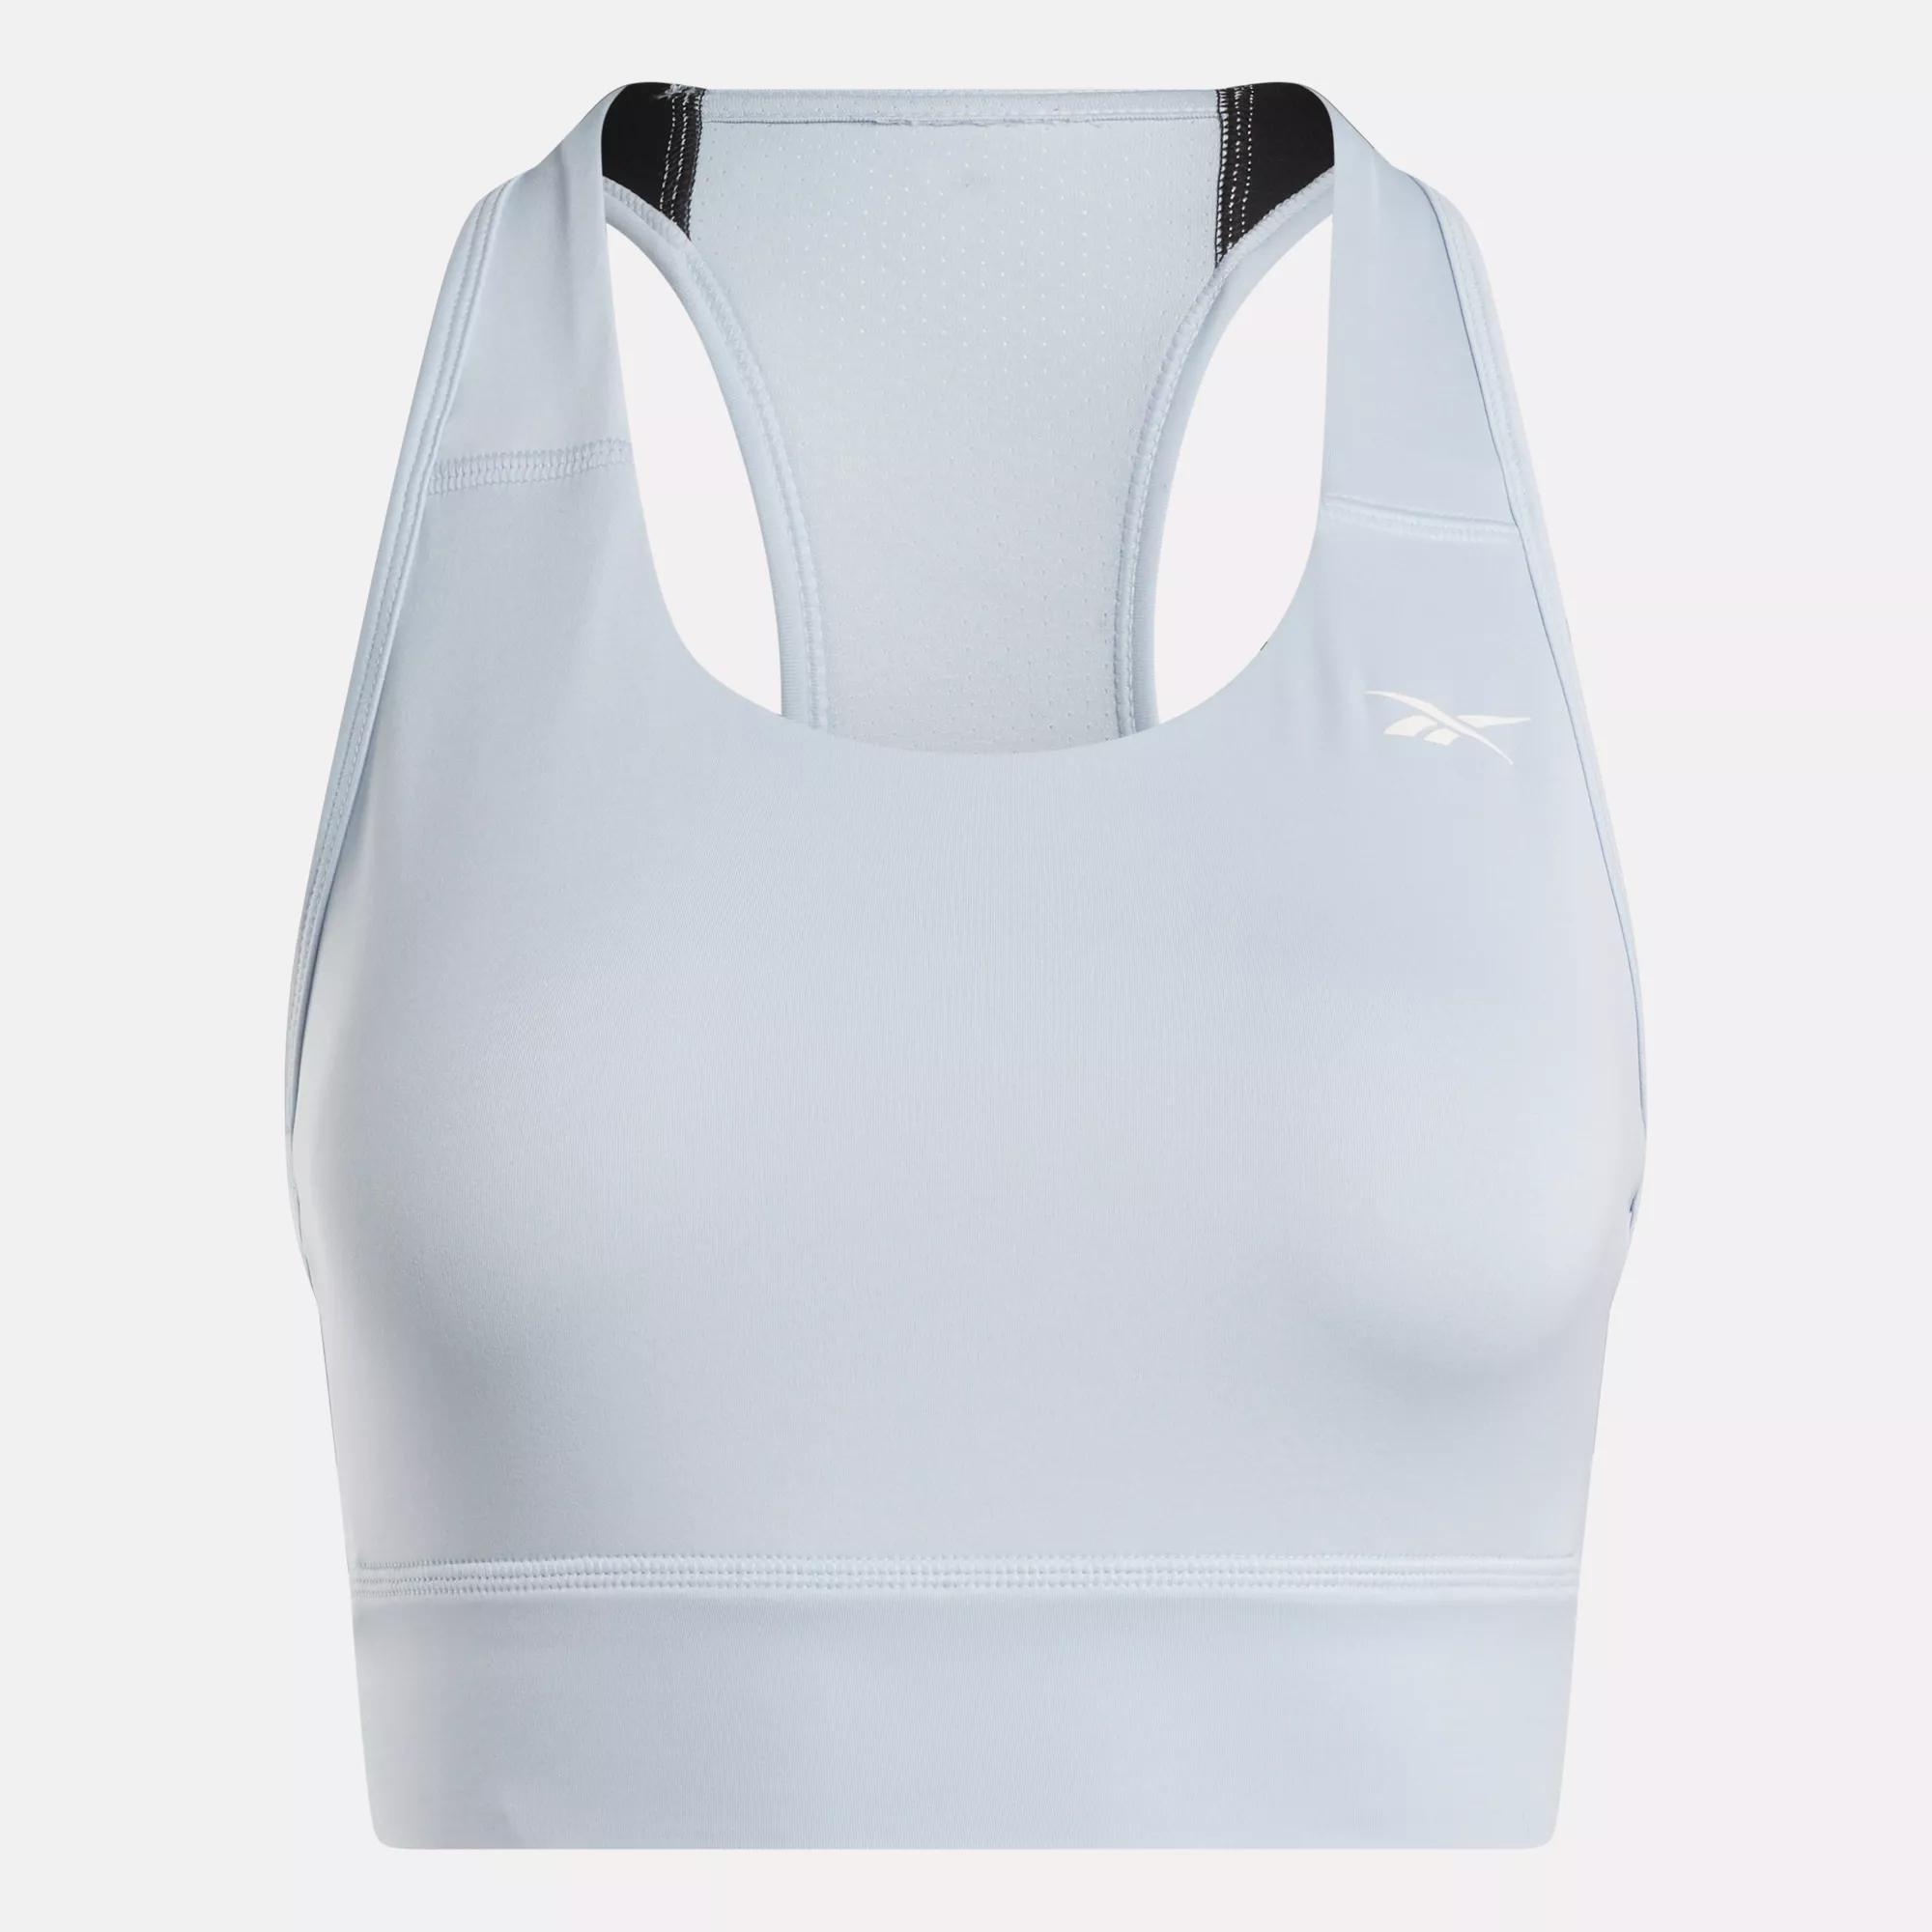 Reebok Running Essentials Women's Sports Bra - Free Shipping